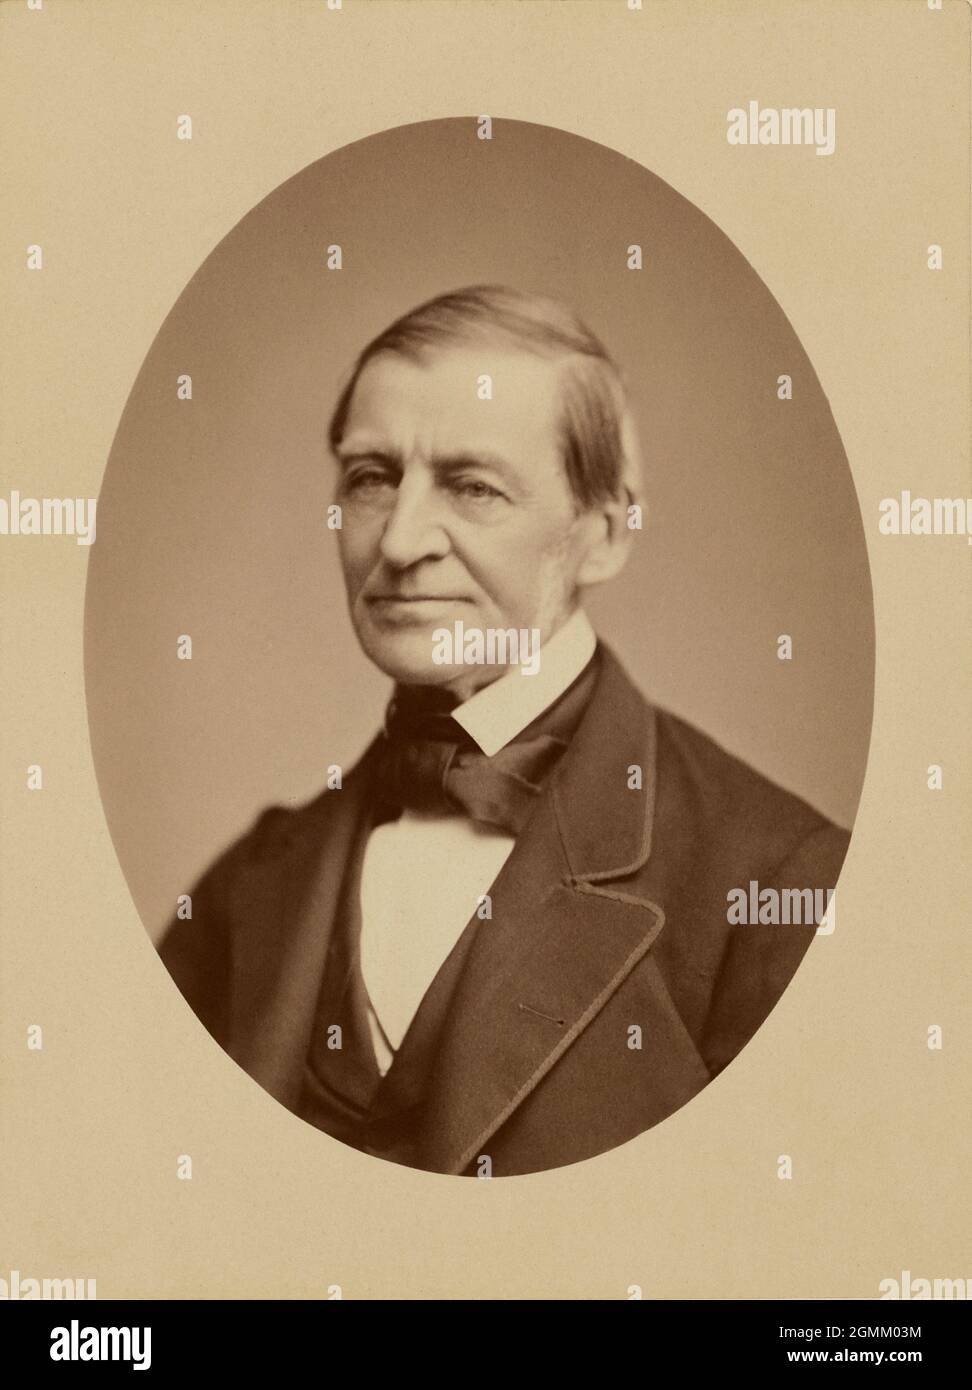 Ralph Waldo Emerson (1803-1882), American Essayist, Lecturer, Poet and Leader of the Transcendentalist Movement, head and shoulders Portrait, Frederick Gutekunst, 1875 Stock Photo